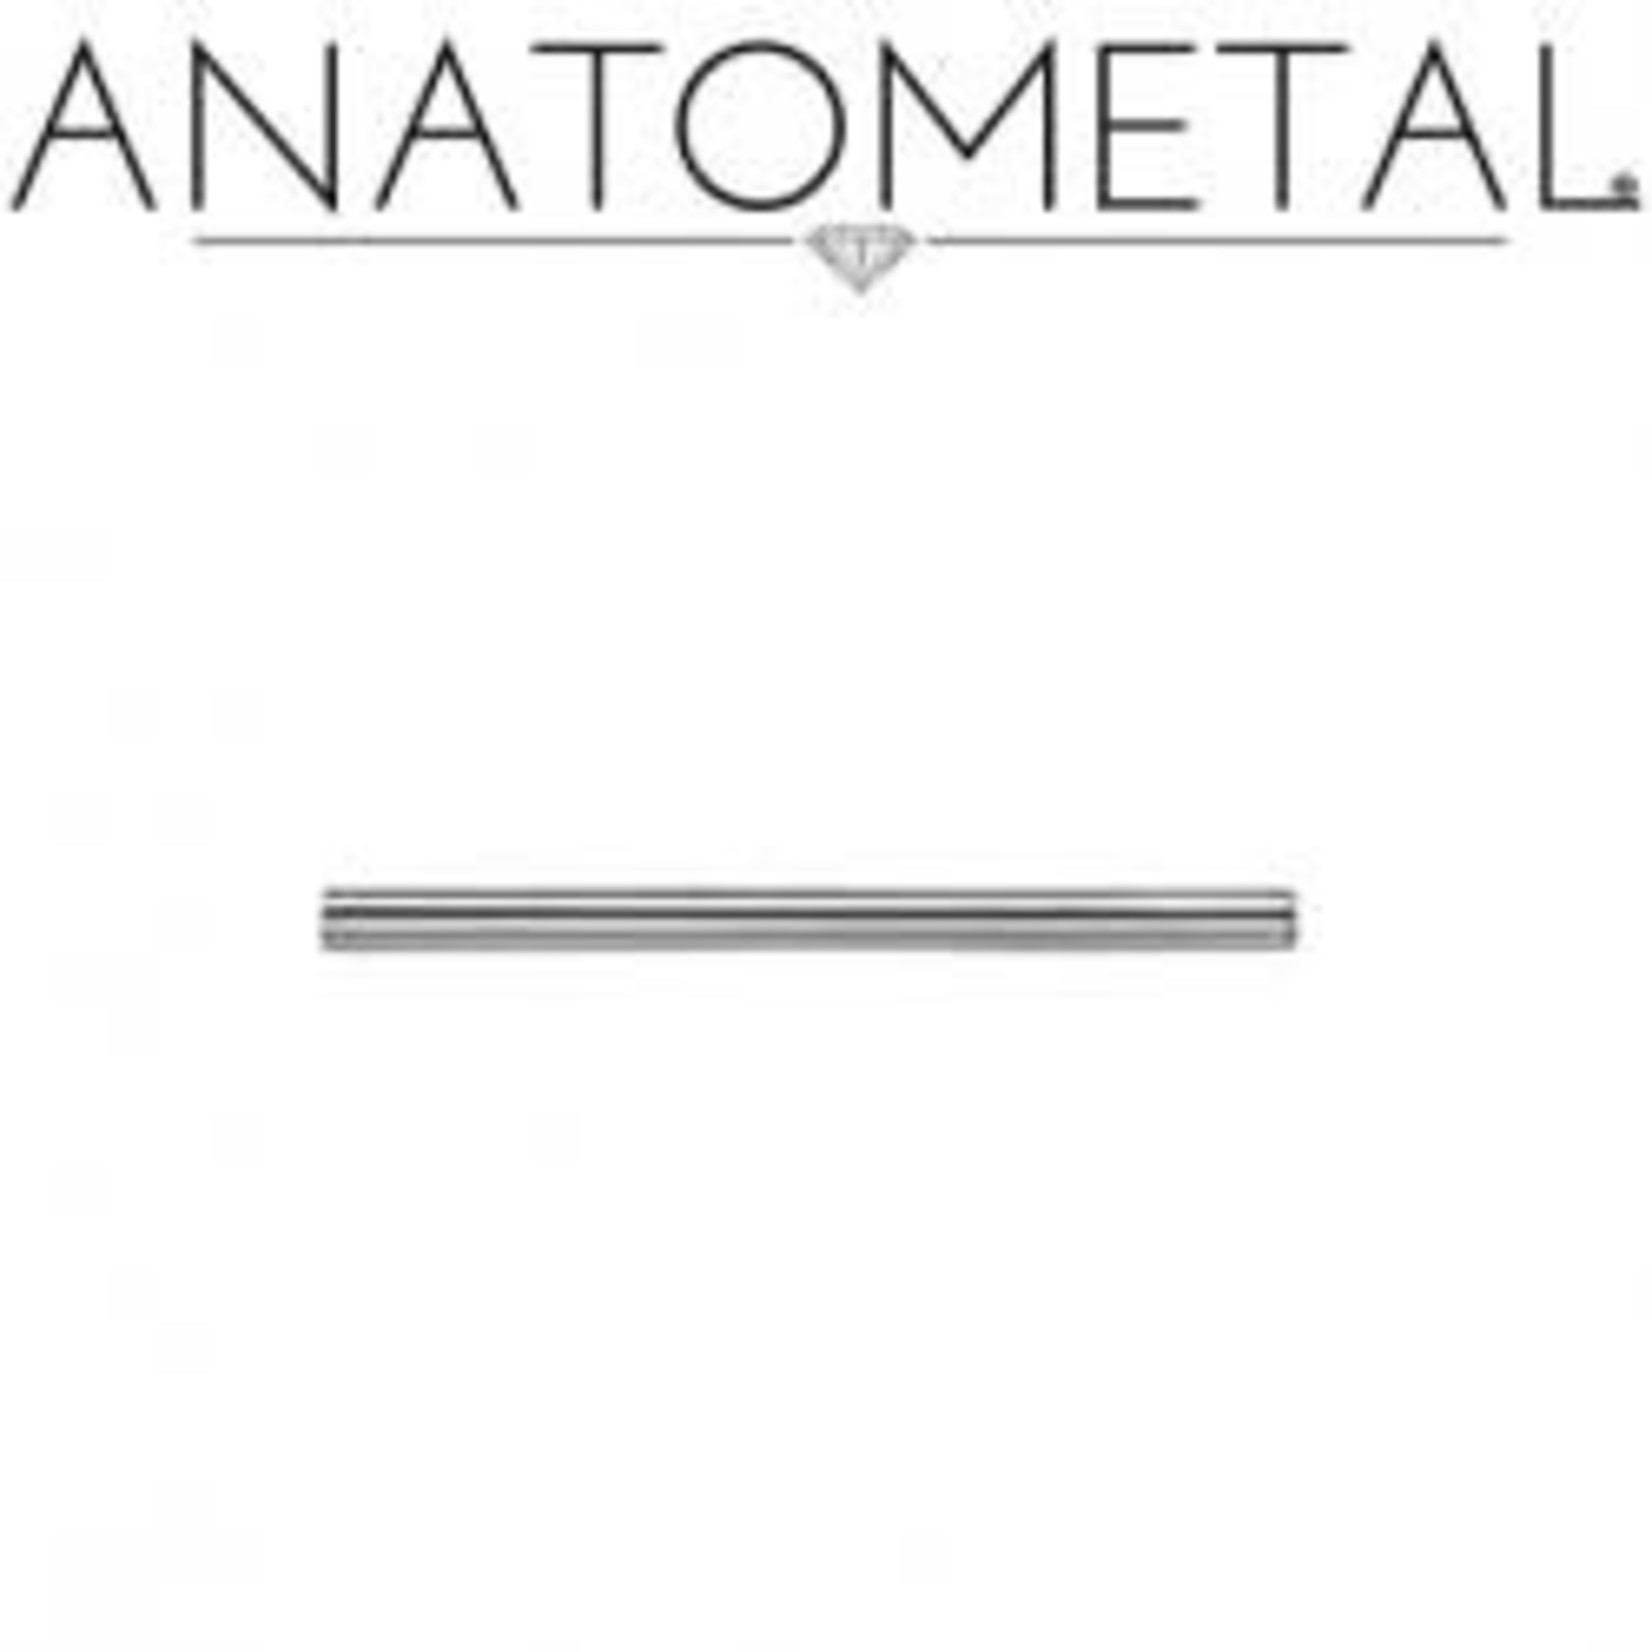 Anatometal Anatometal 12g steel straight barbell shaft